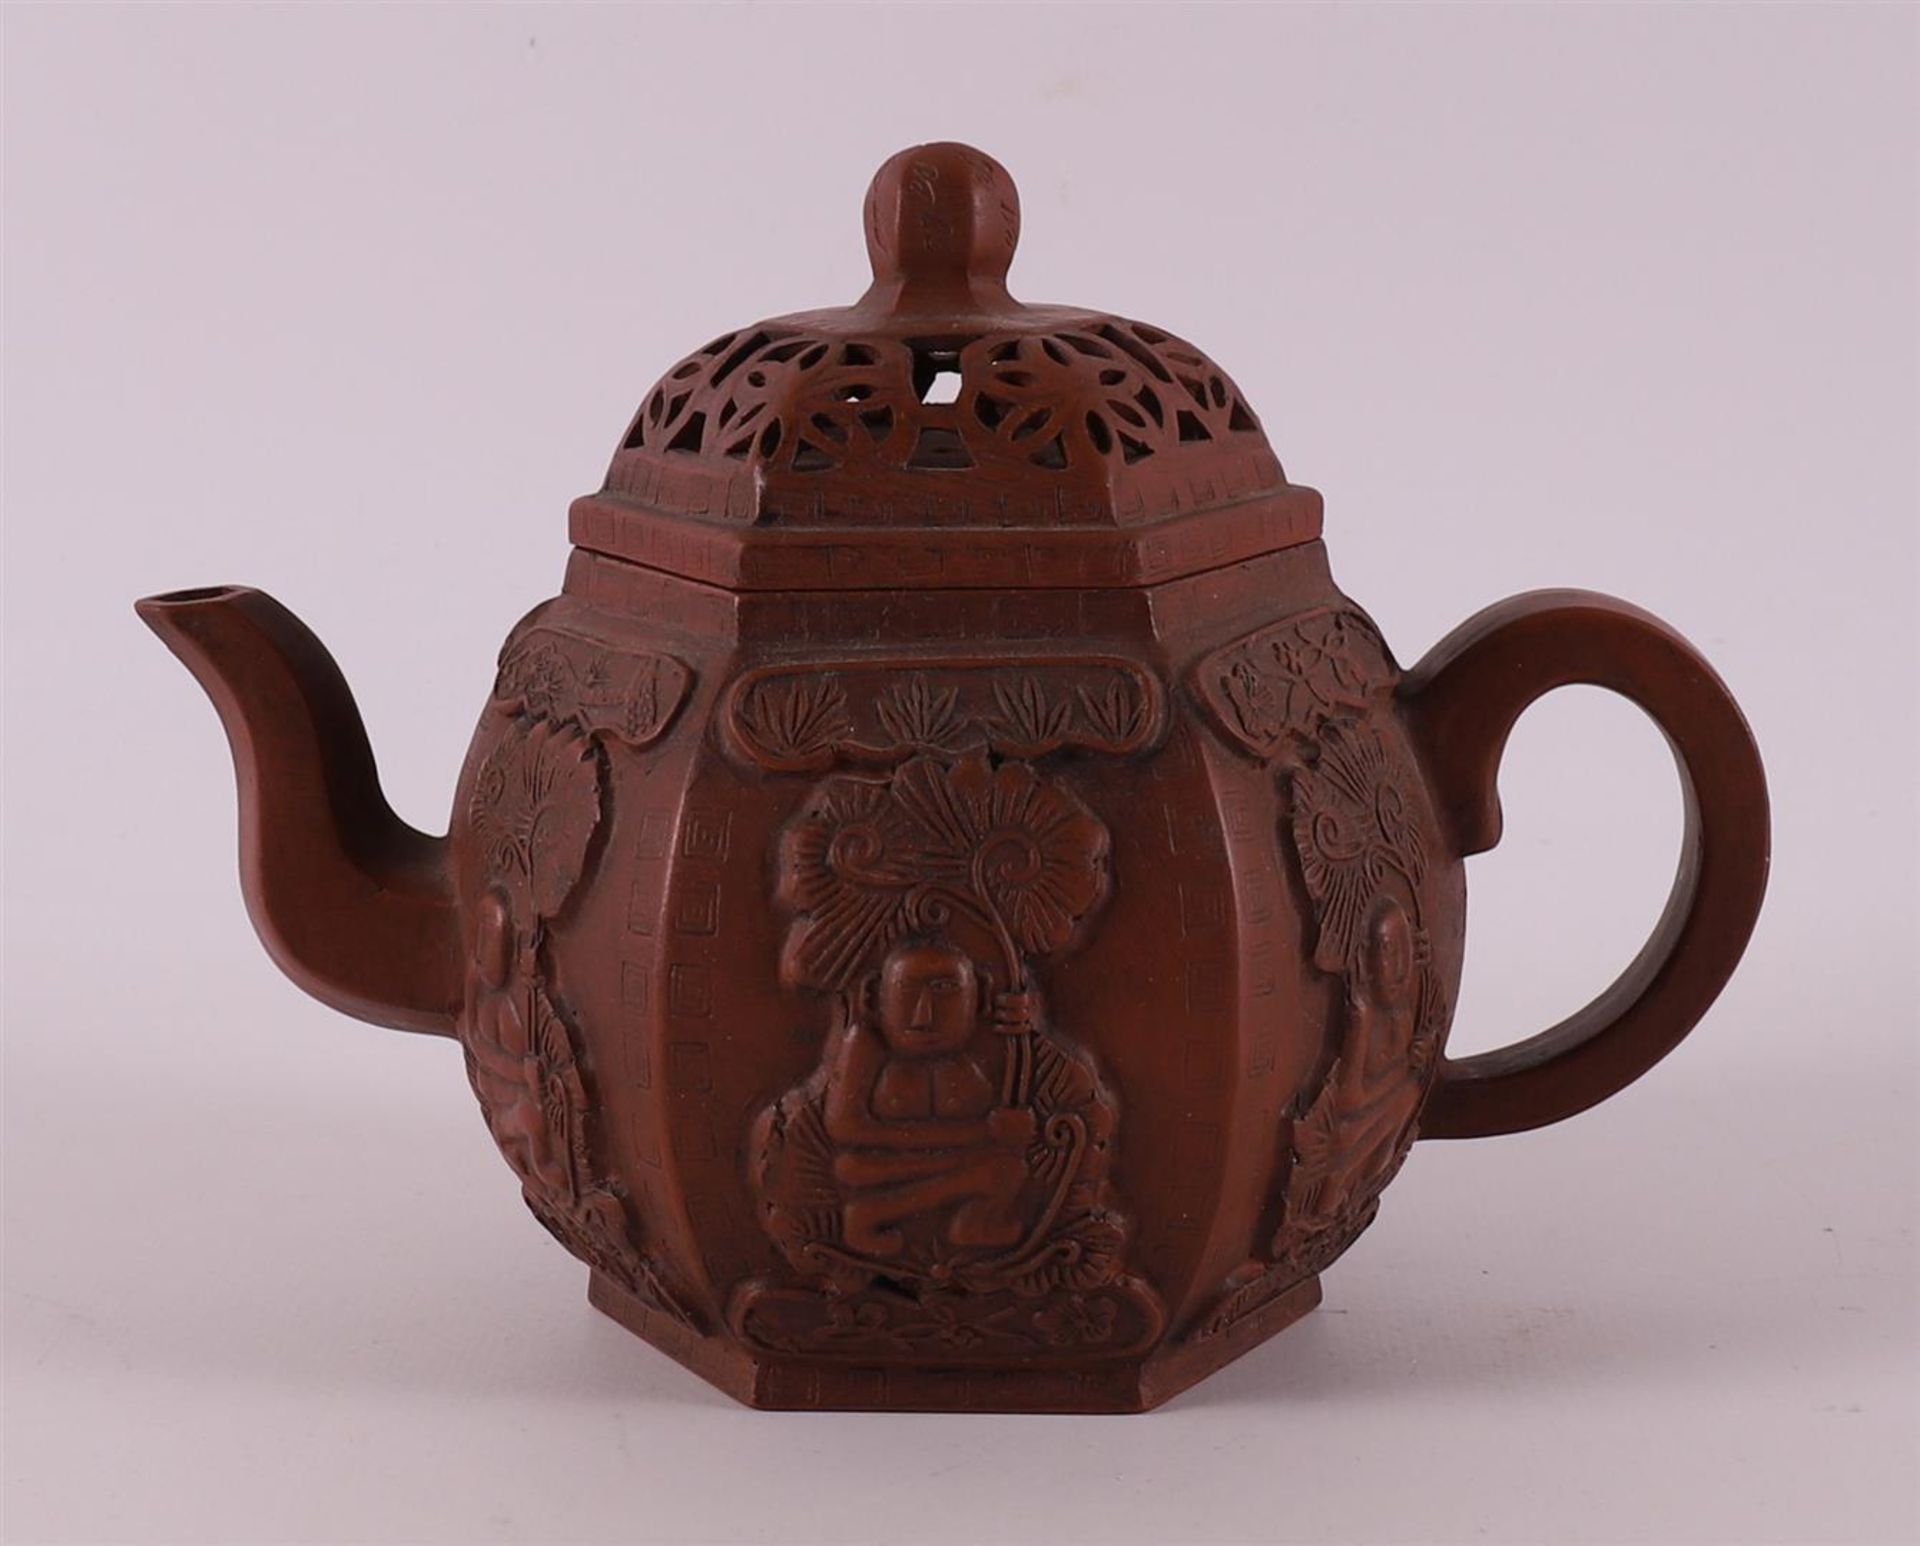 A yixing stoneware hexagonal teapot, China, 20th century.